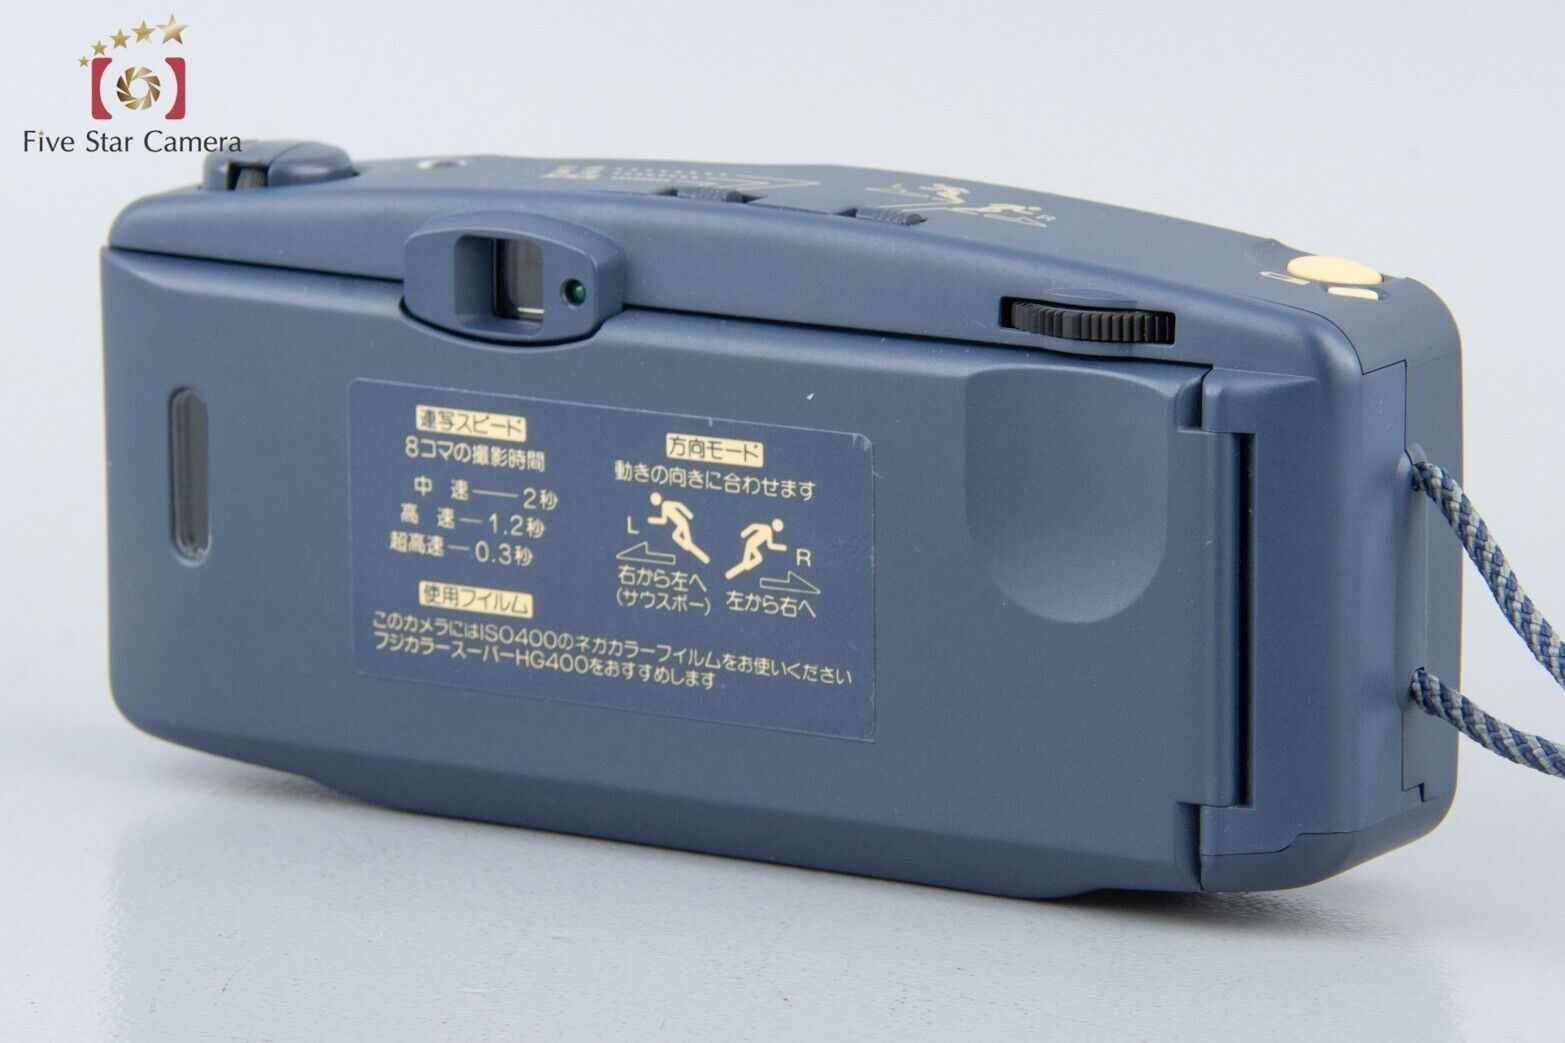 Fujifilm RENSHA CARDIA Byu-N 8 35mm Point & Shoot Film Camera